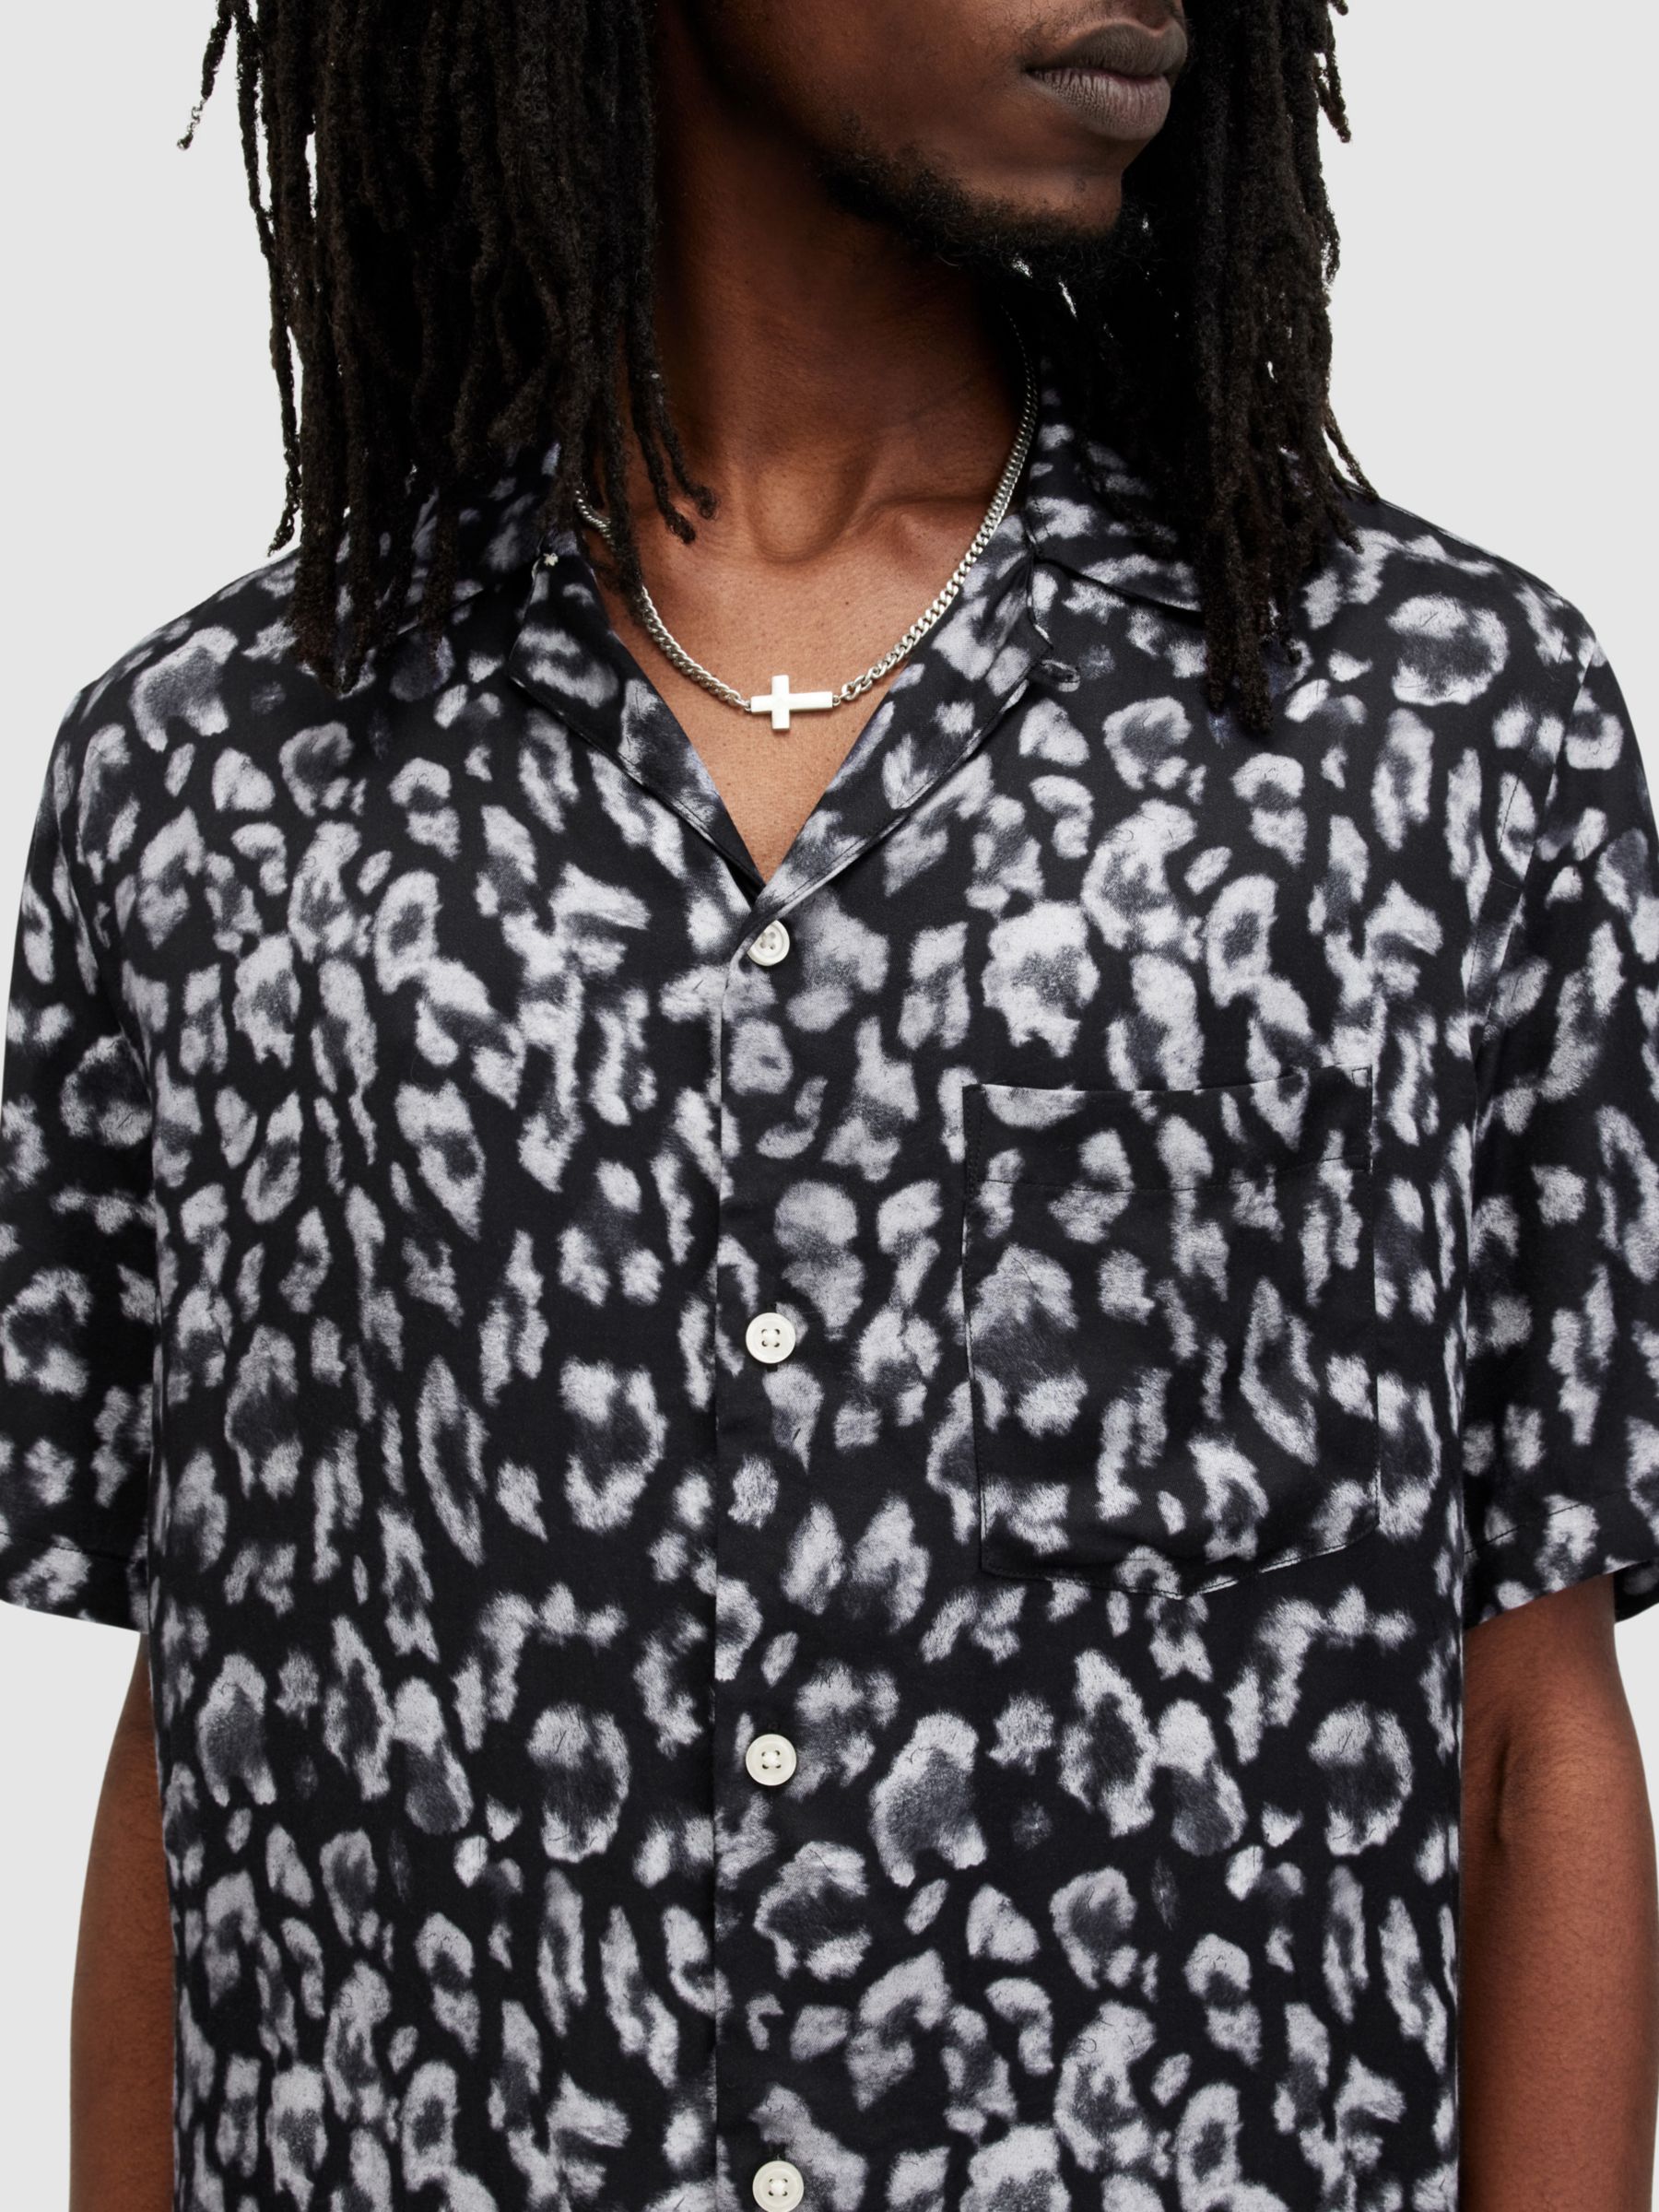 Buy AllSaints Leopaz Leopard Print Short Sleeve Shirt Online at johnlewis.com